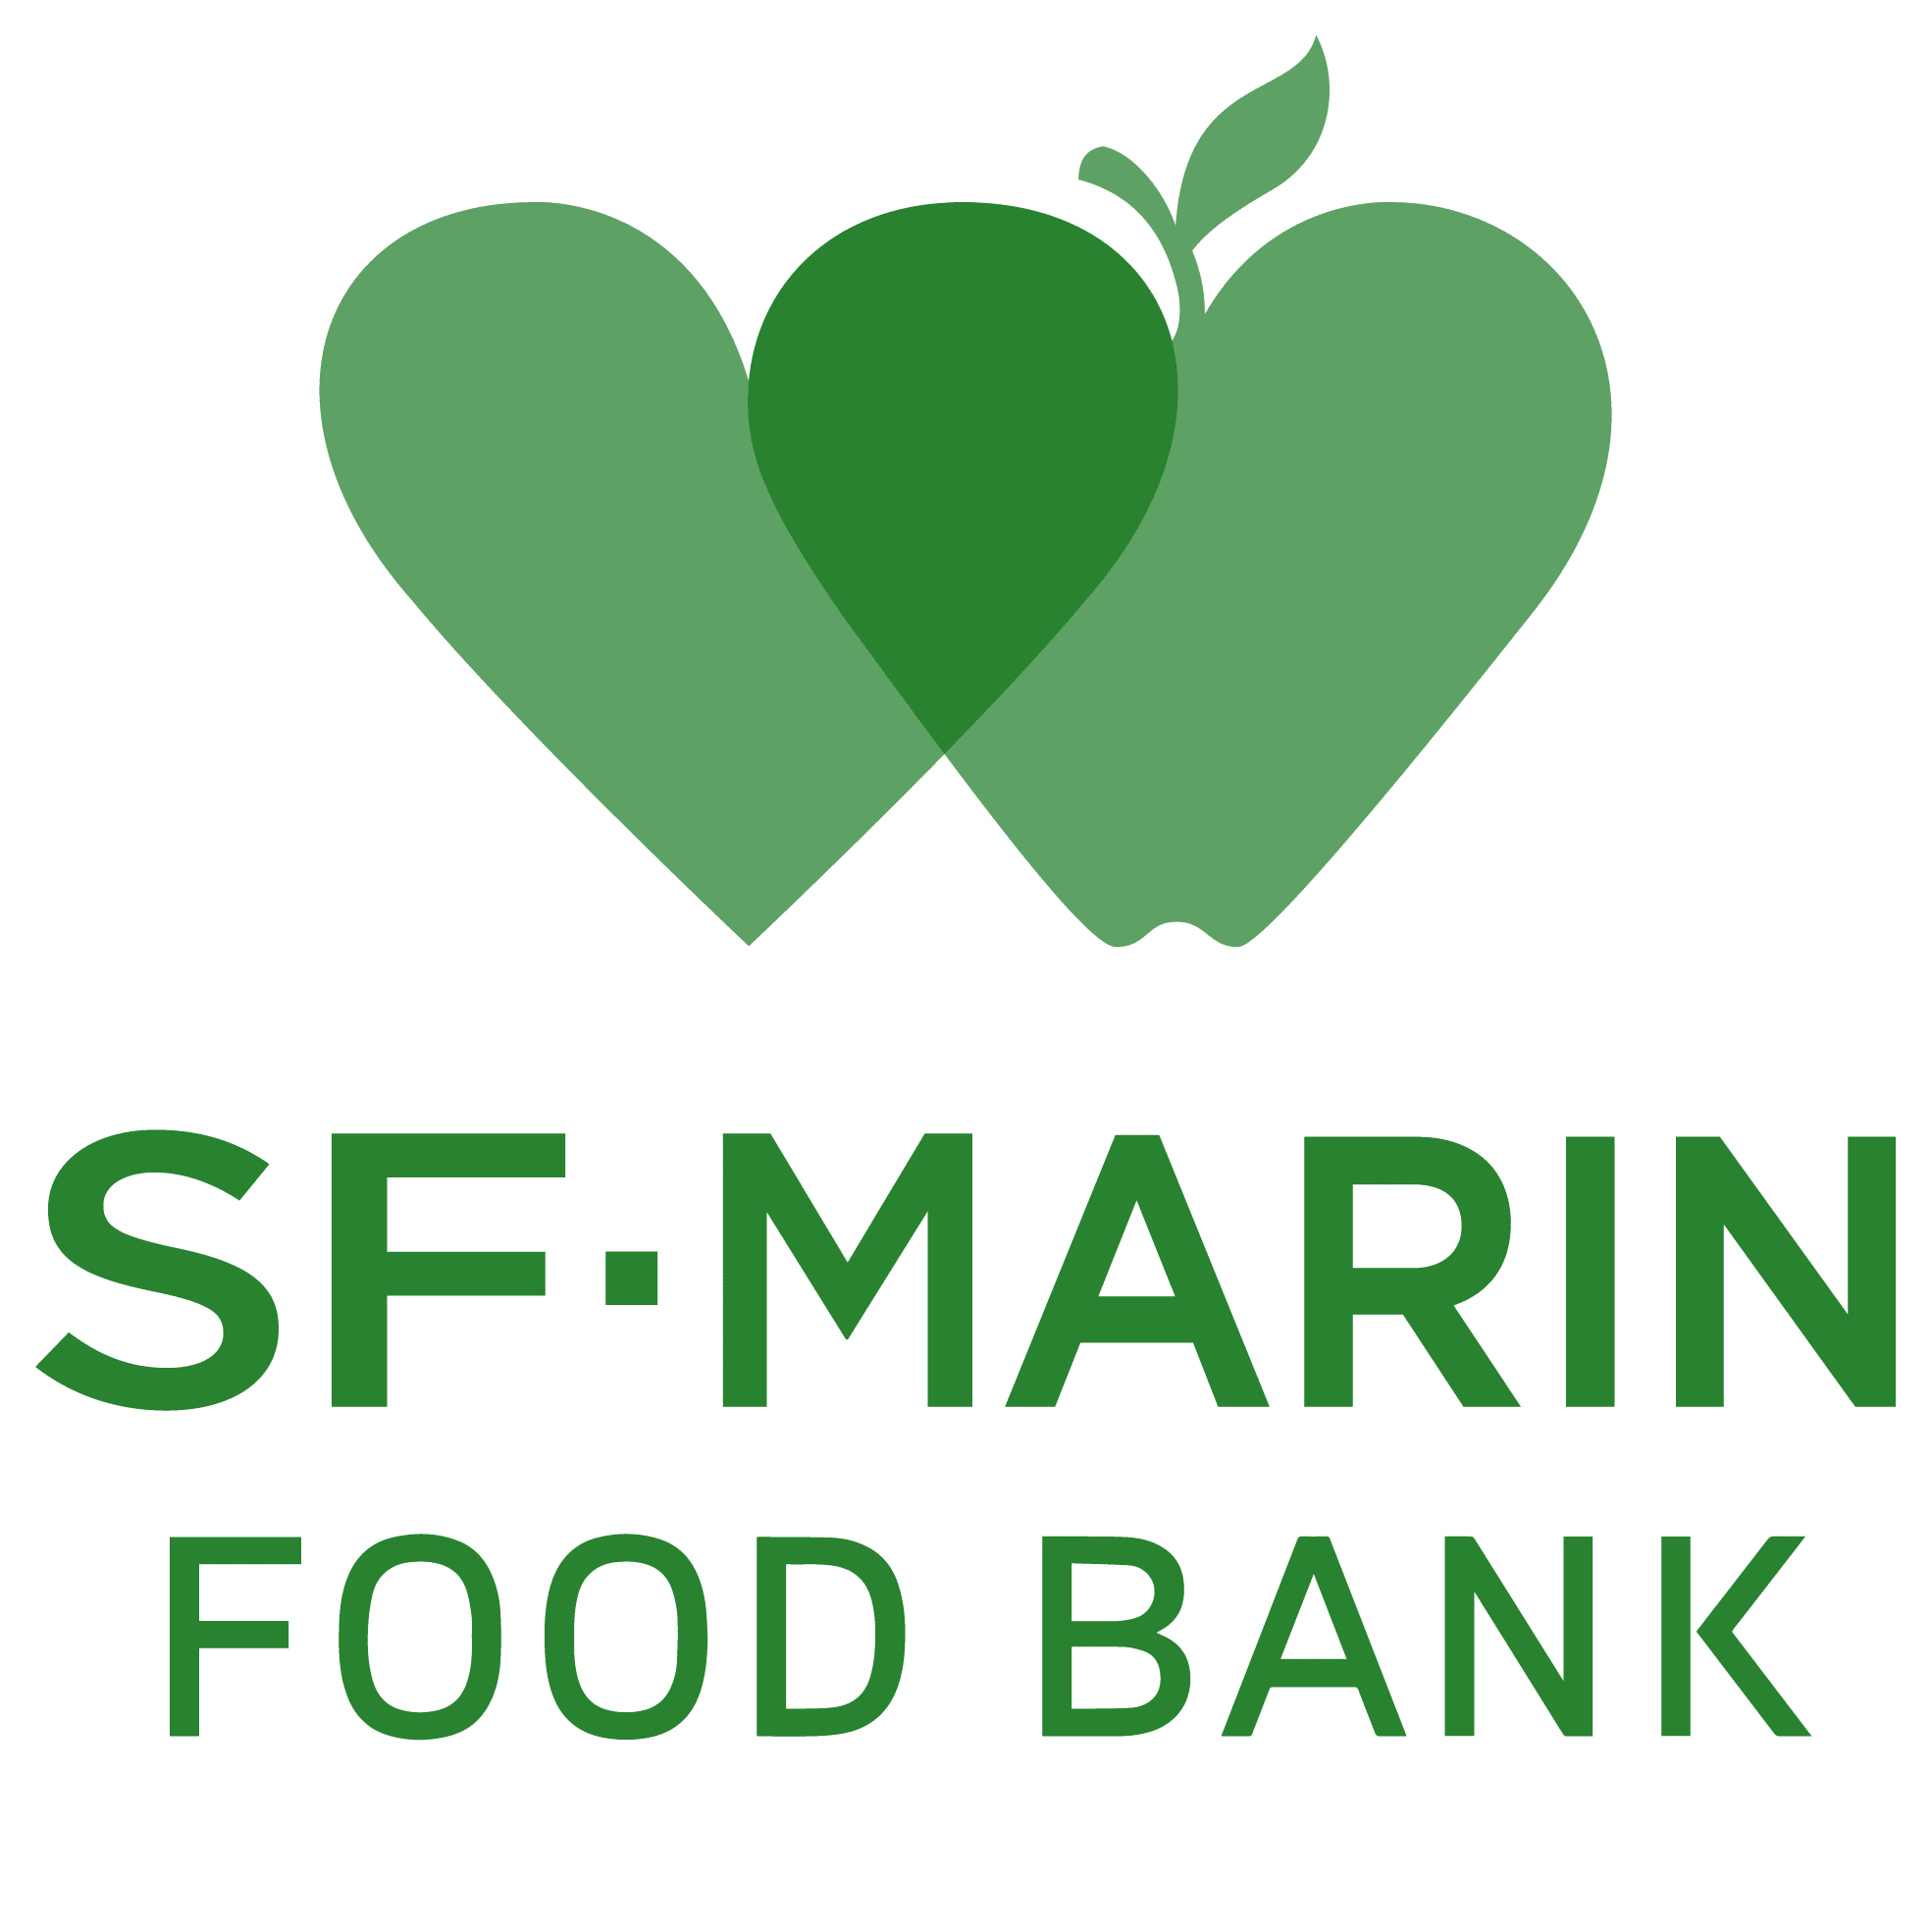 San Francisco Marin Food Bank